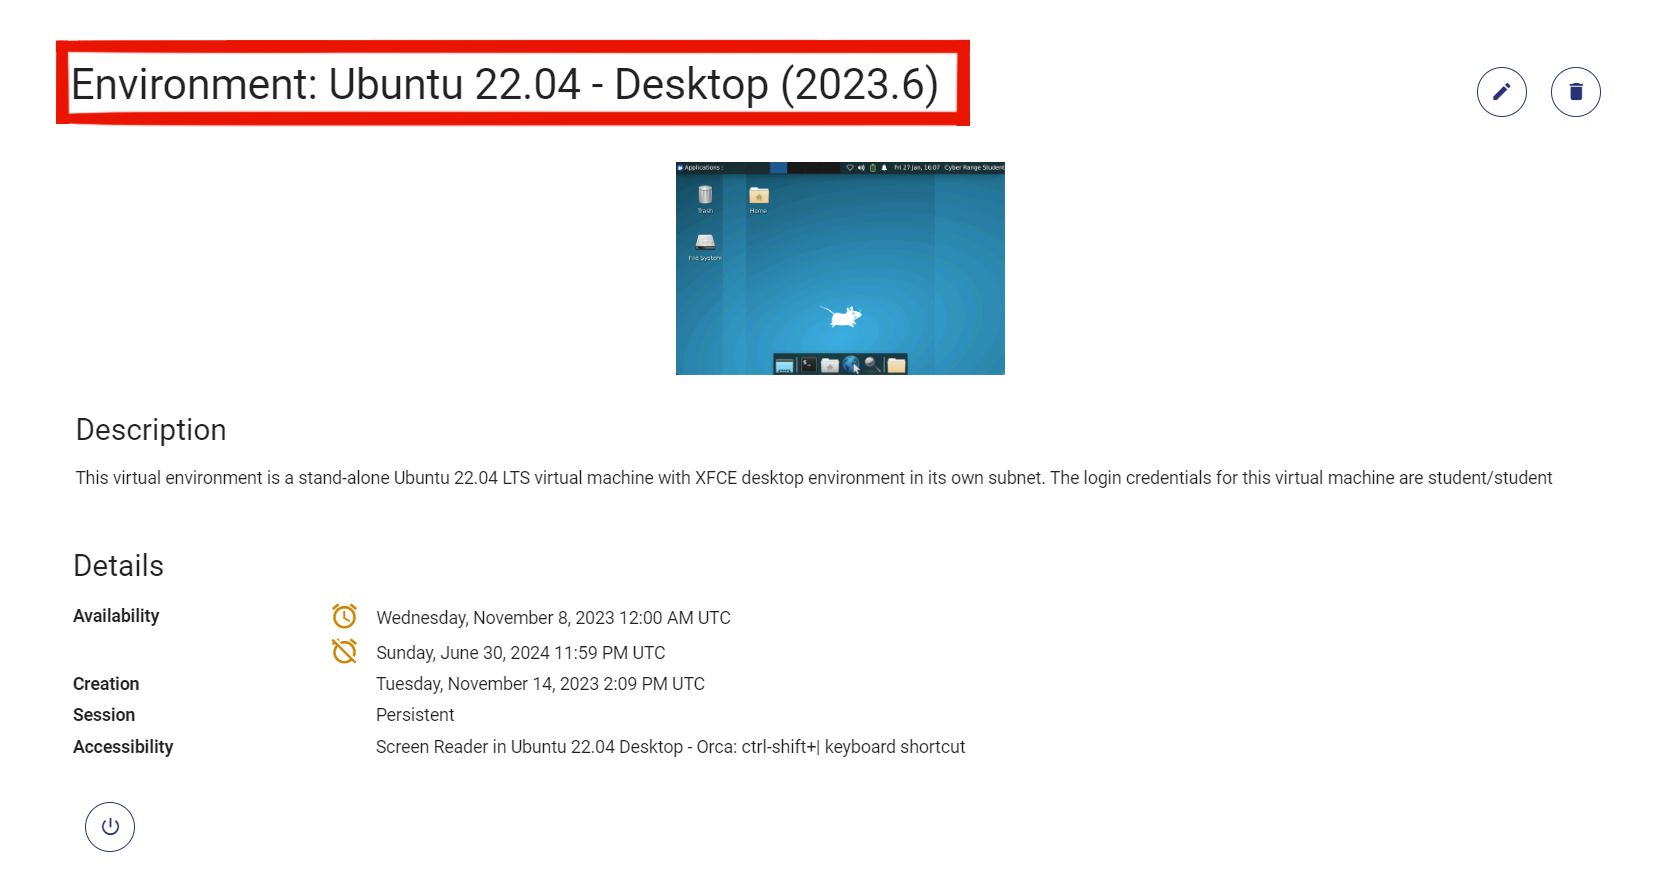 Exercise environment named "Environment: Ubuntu 22.04 - Desktop (2023.6).